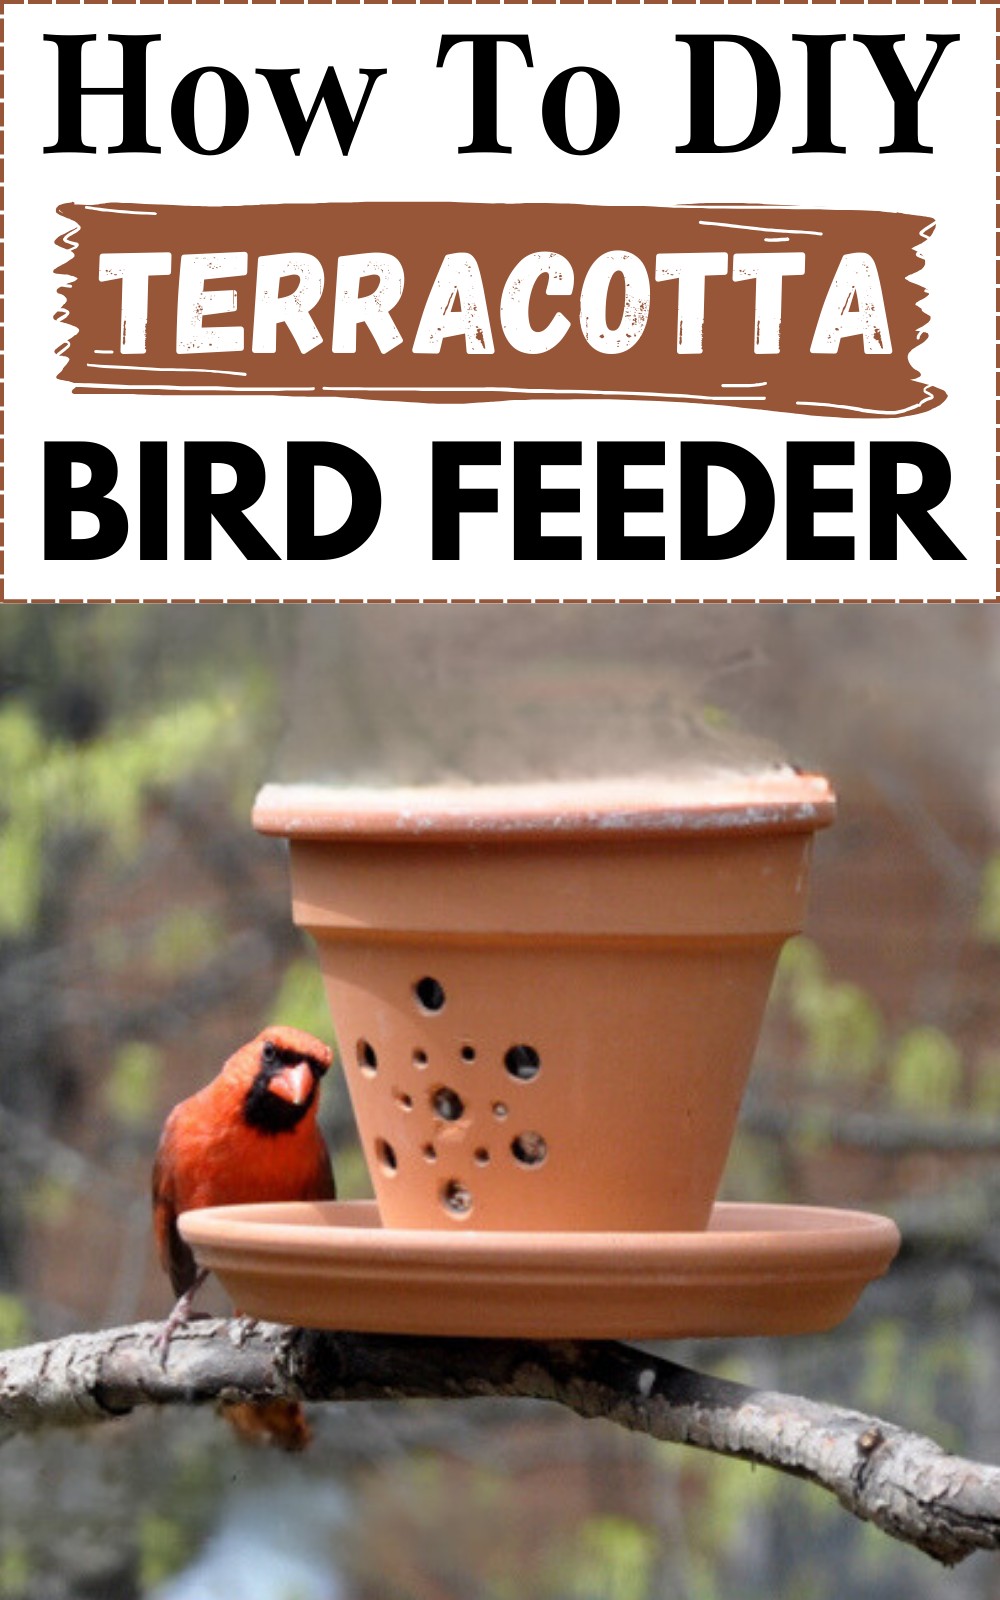 How to DIY Terracotta Bird Feeder